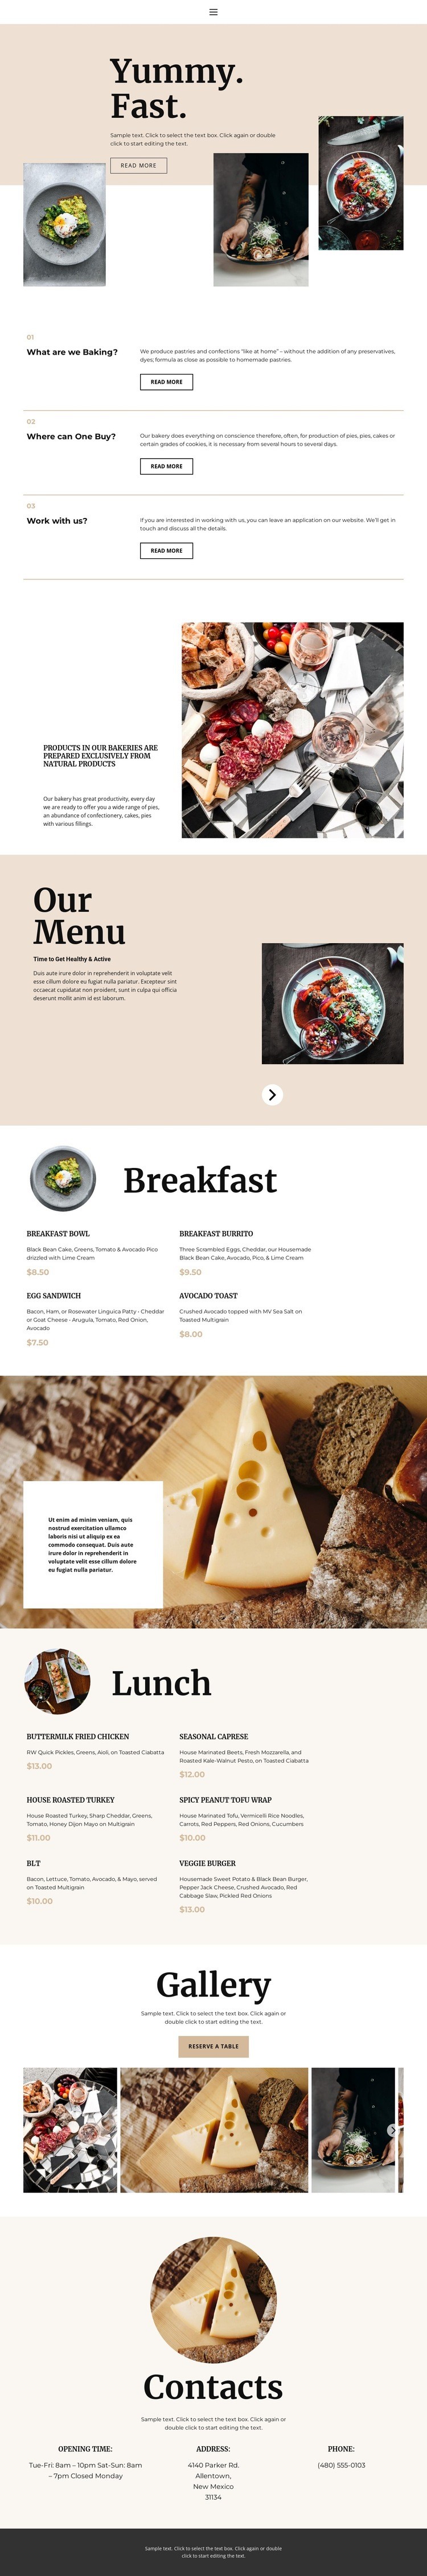 New restaurant Web Page Design